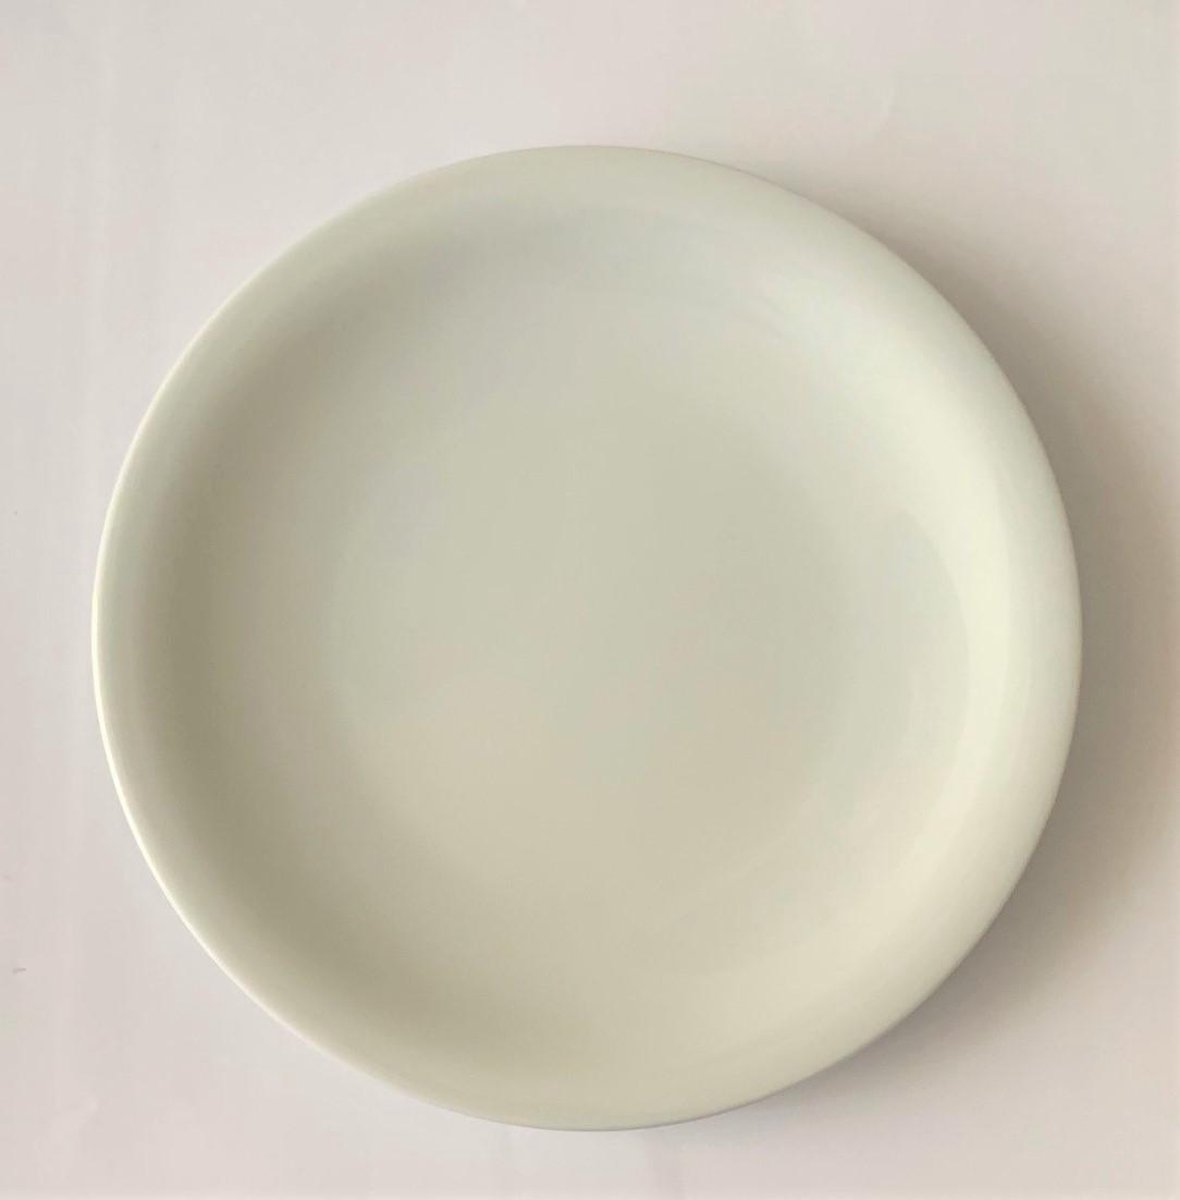 2 stuks Kahla ontbijtbordjes, diameter 21,5 cm